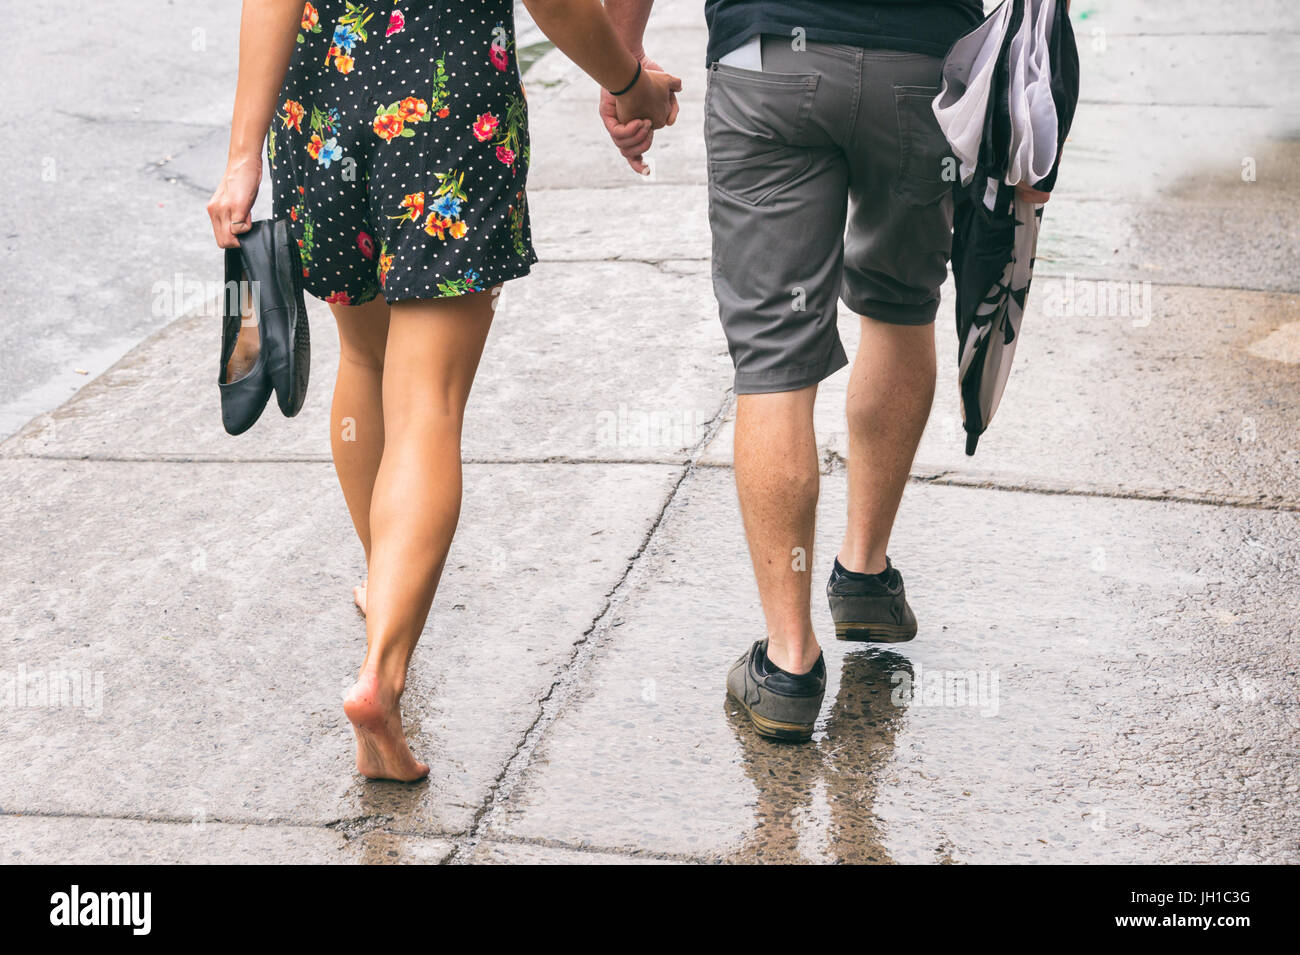 Couple on the street under the rain, woman walking barefoot Stock Photo